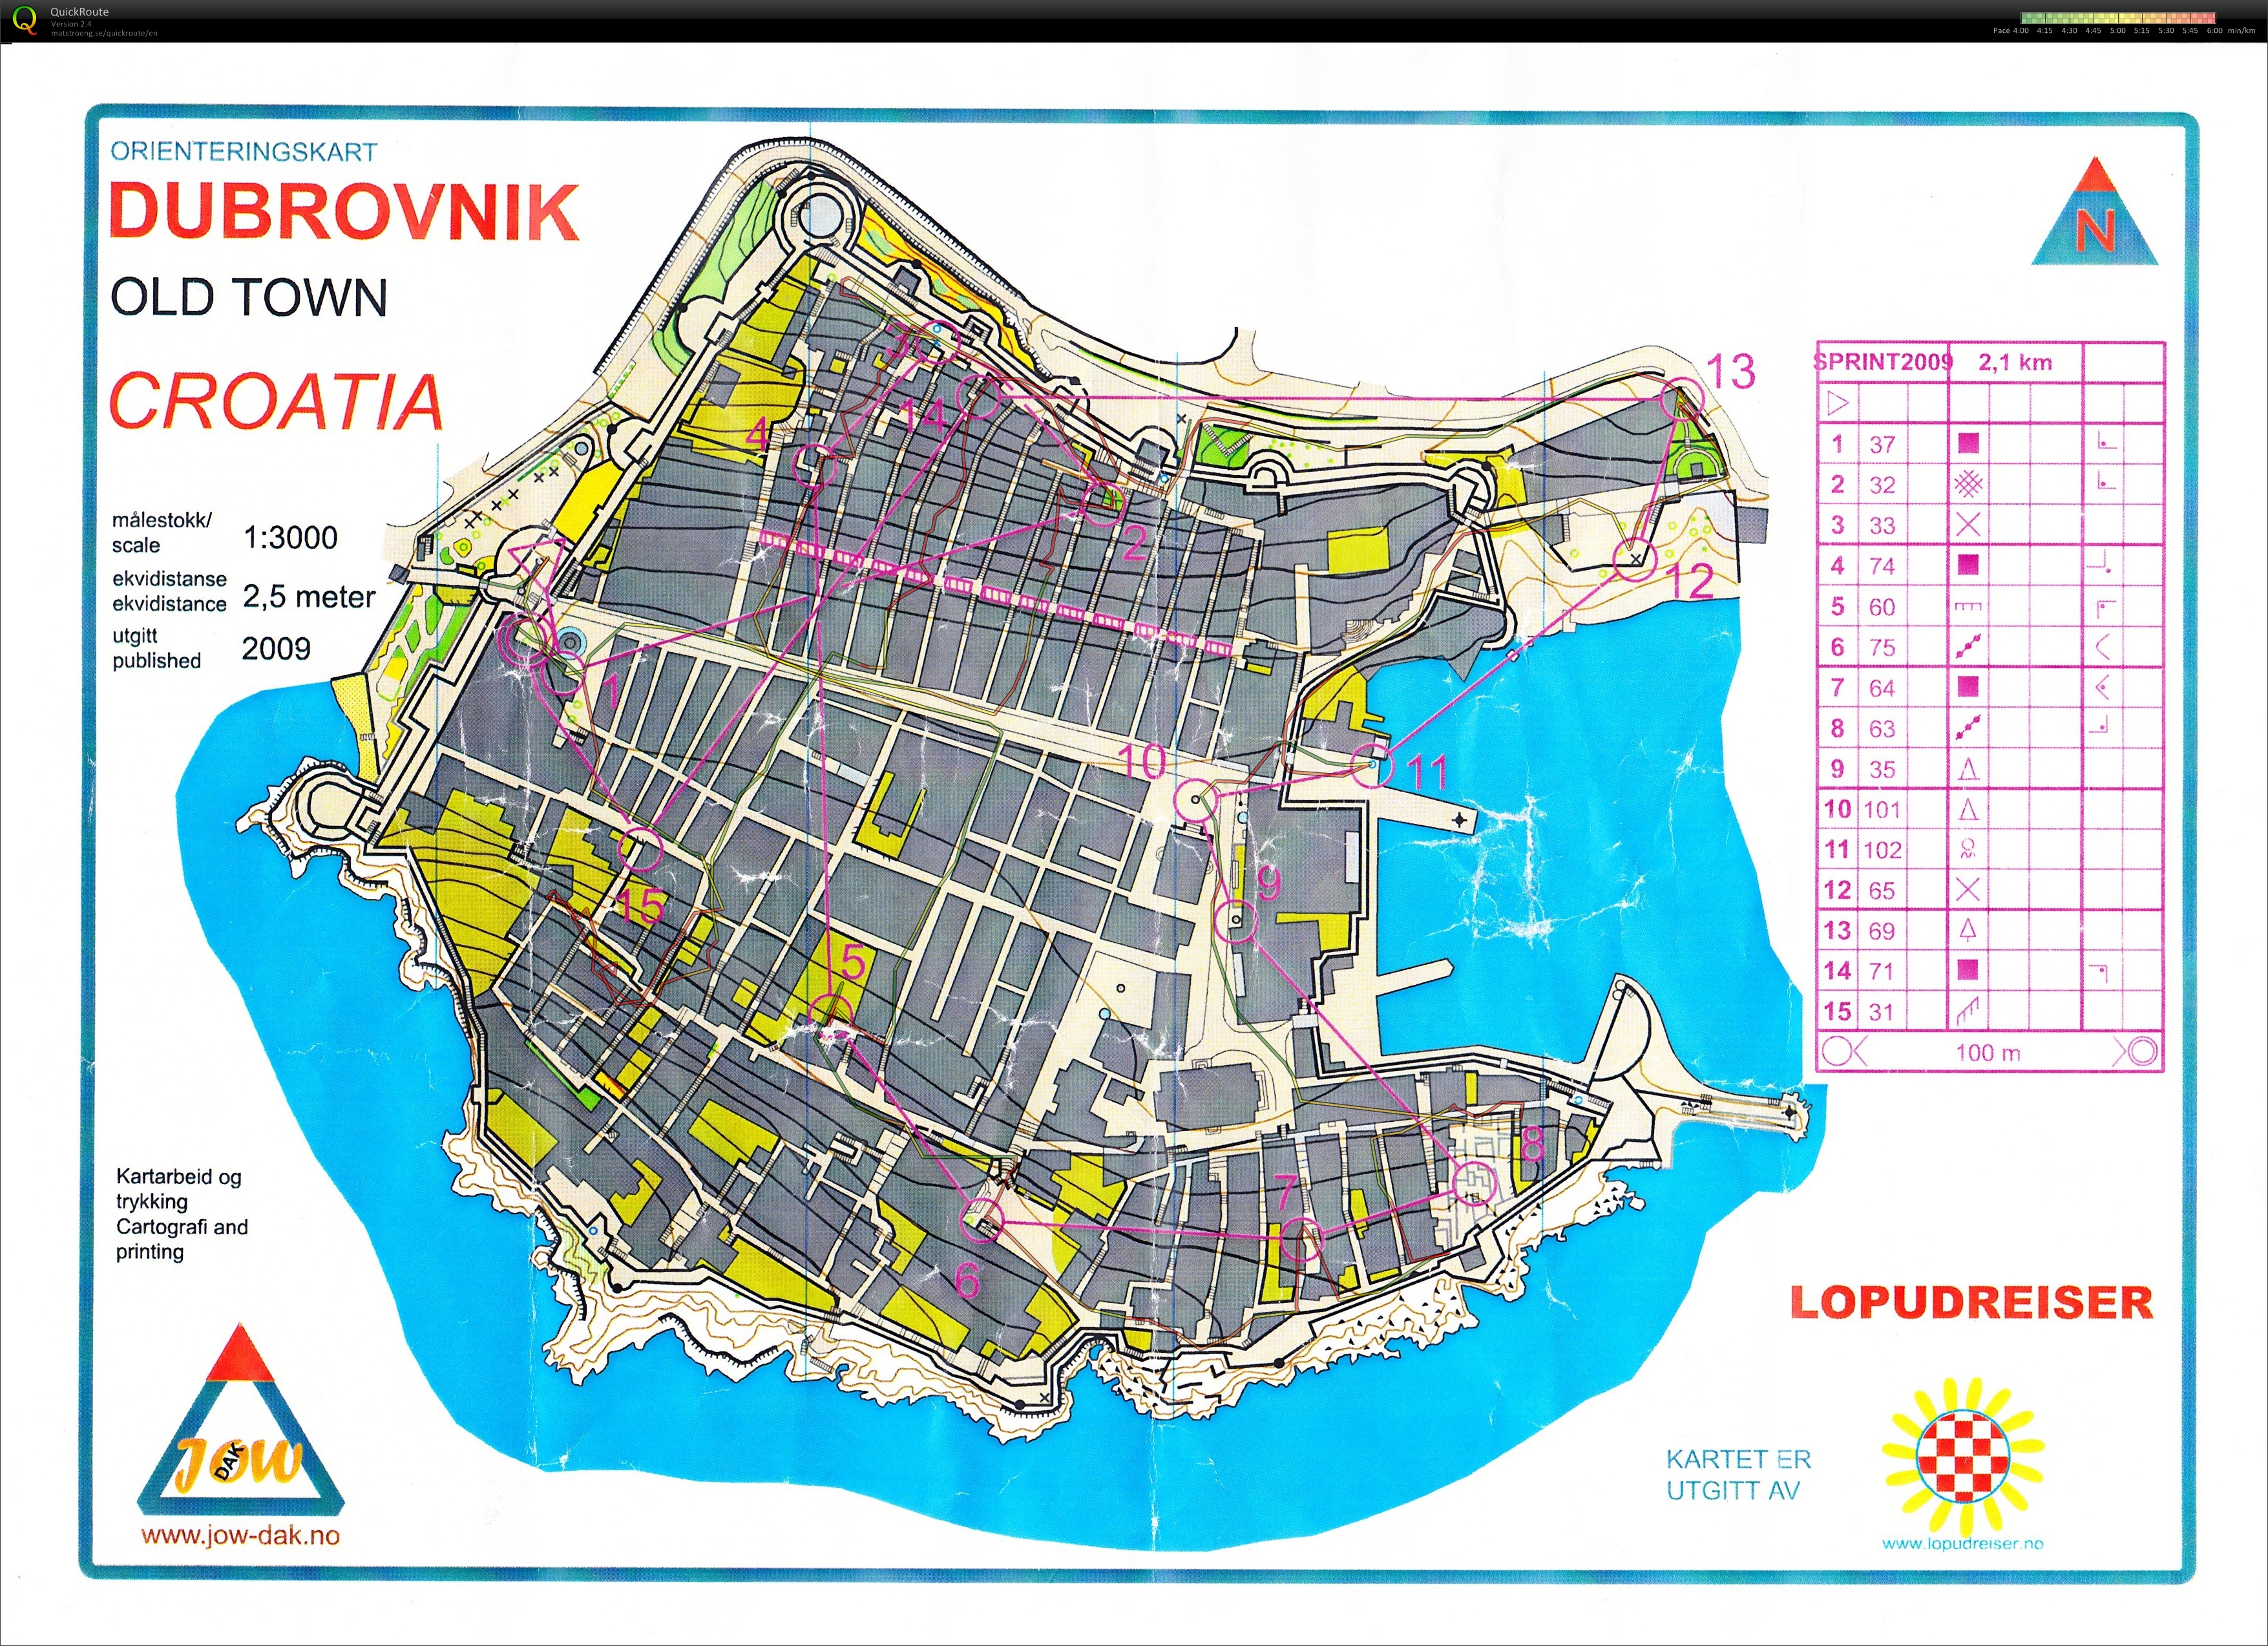 Sprinttrening, Dubrovnik (27/07/2013)